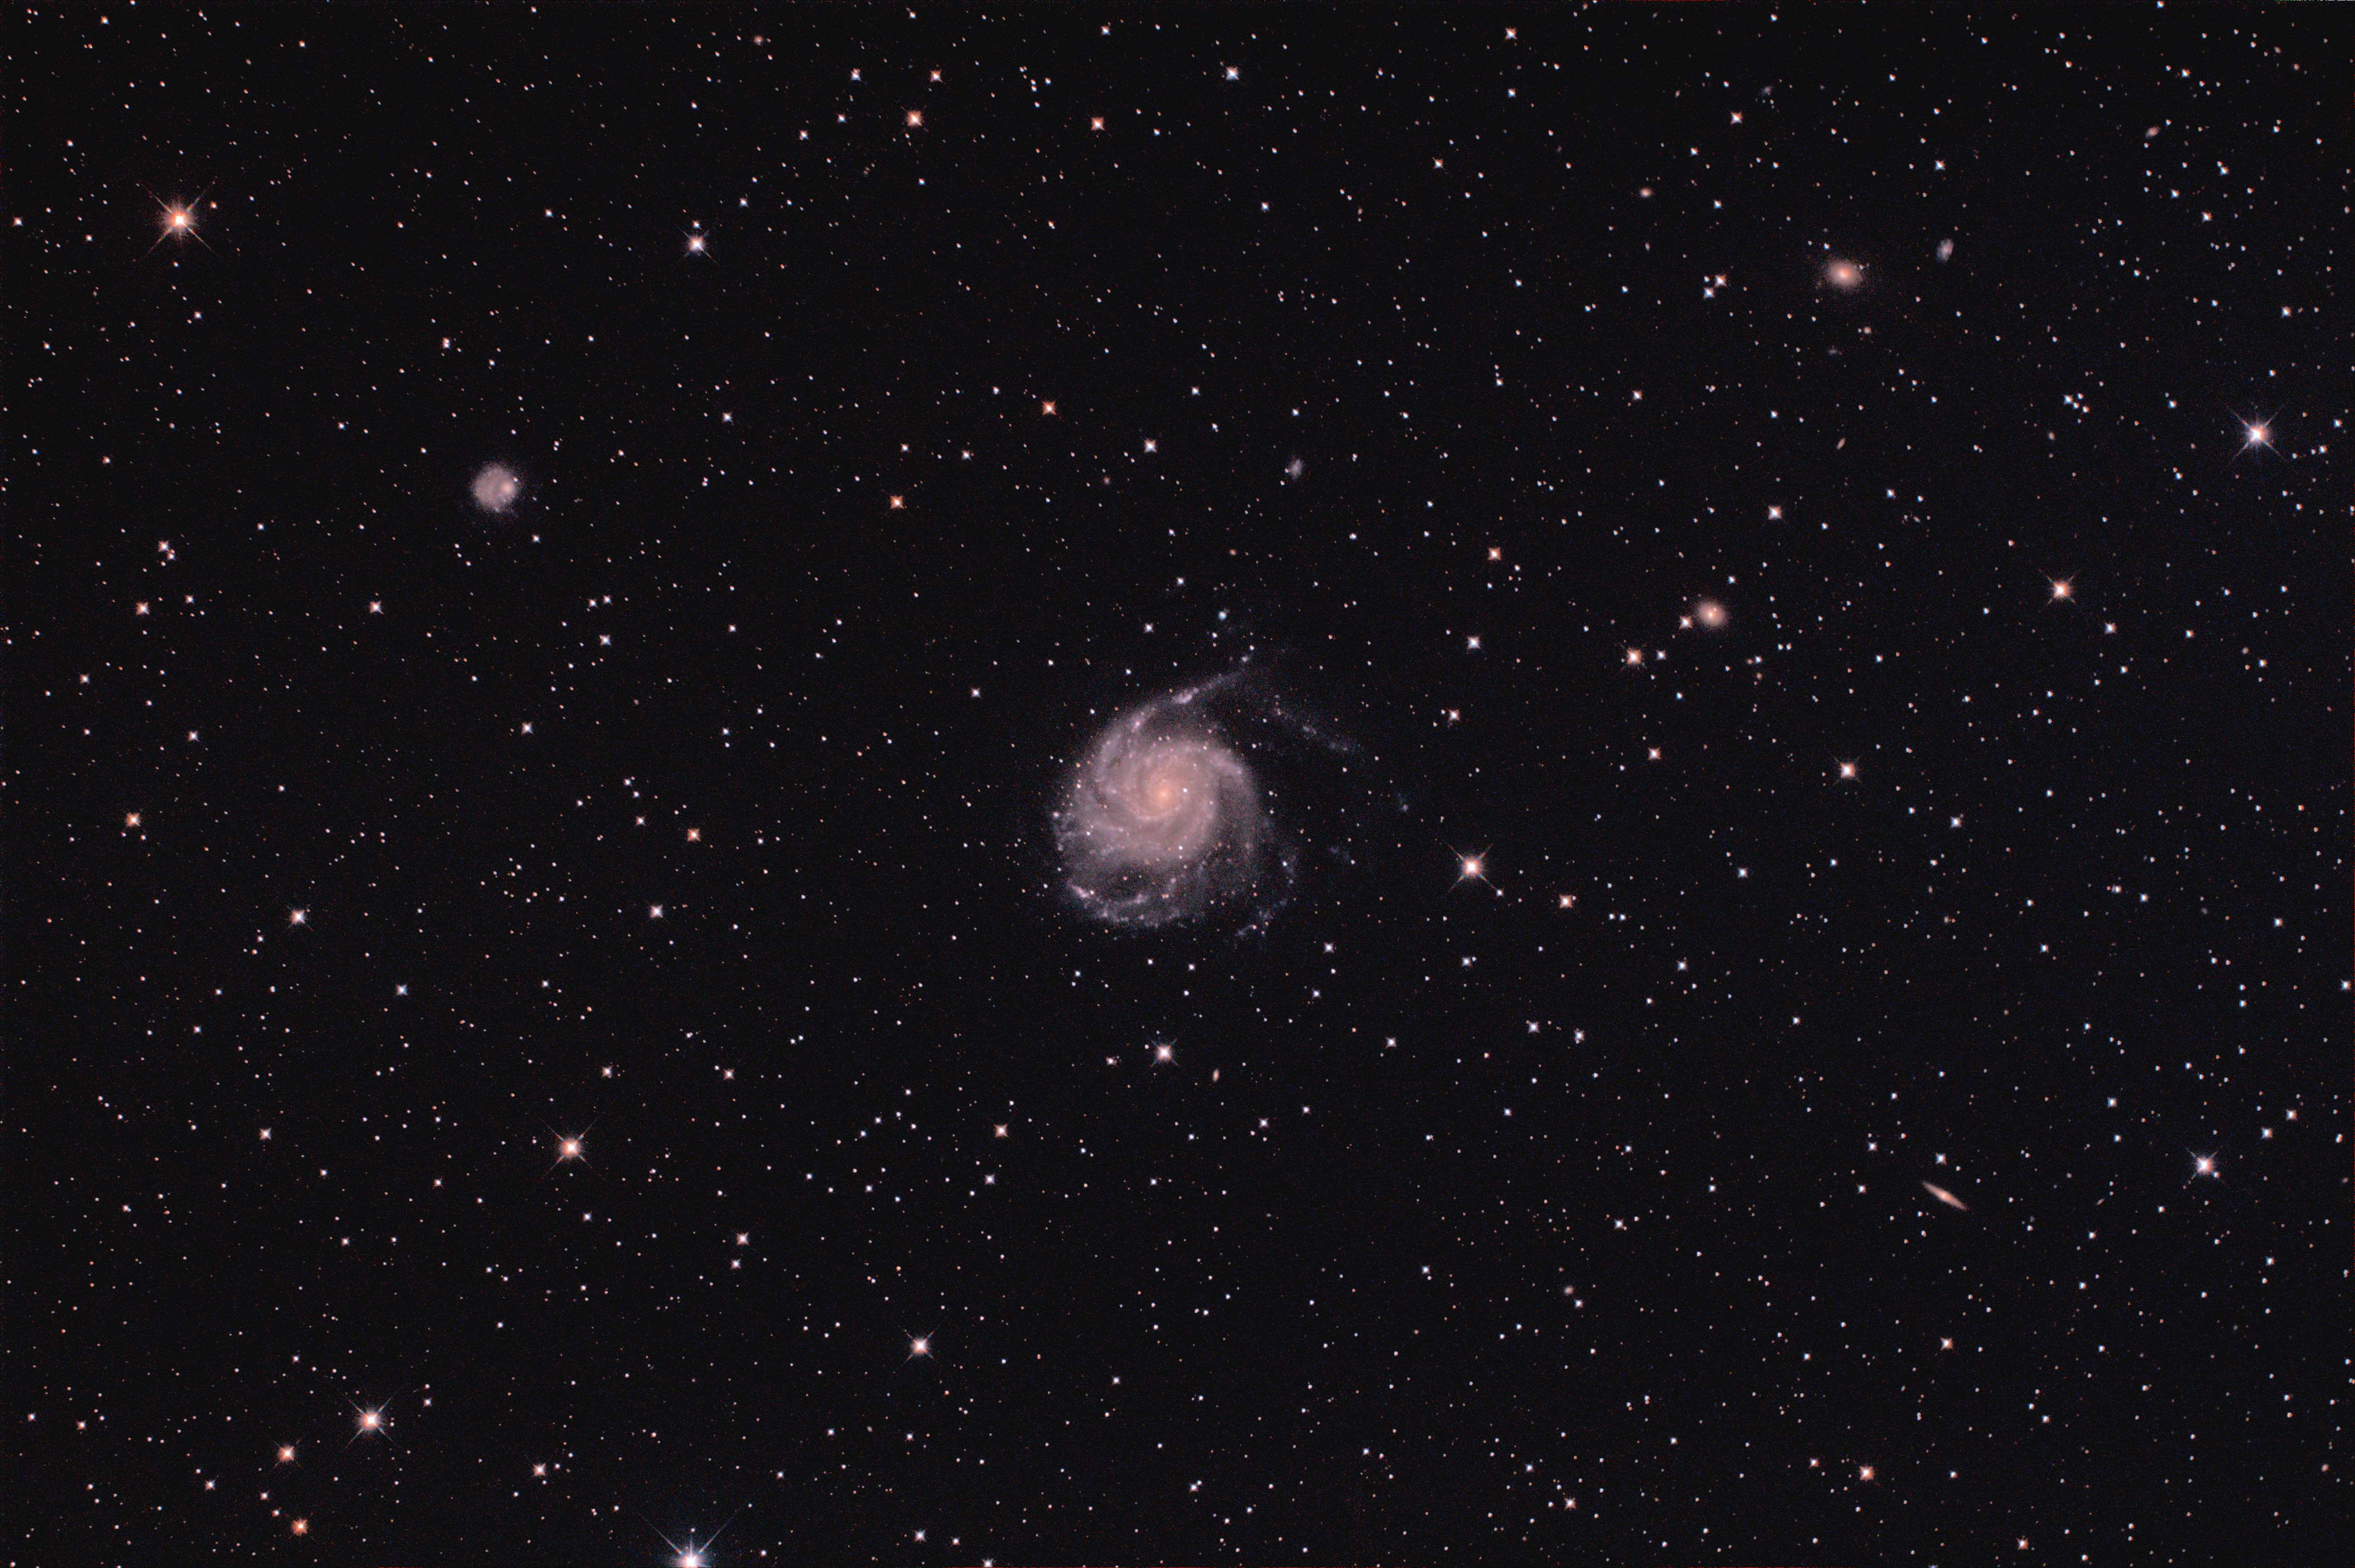 M101_220130_E160_60D_16-180-dss17-005cgw.jpg